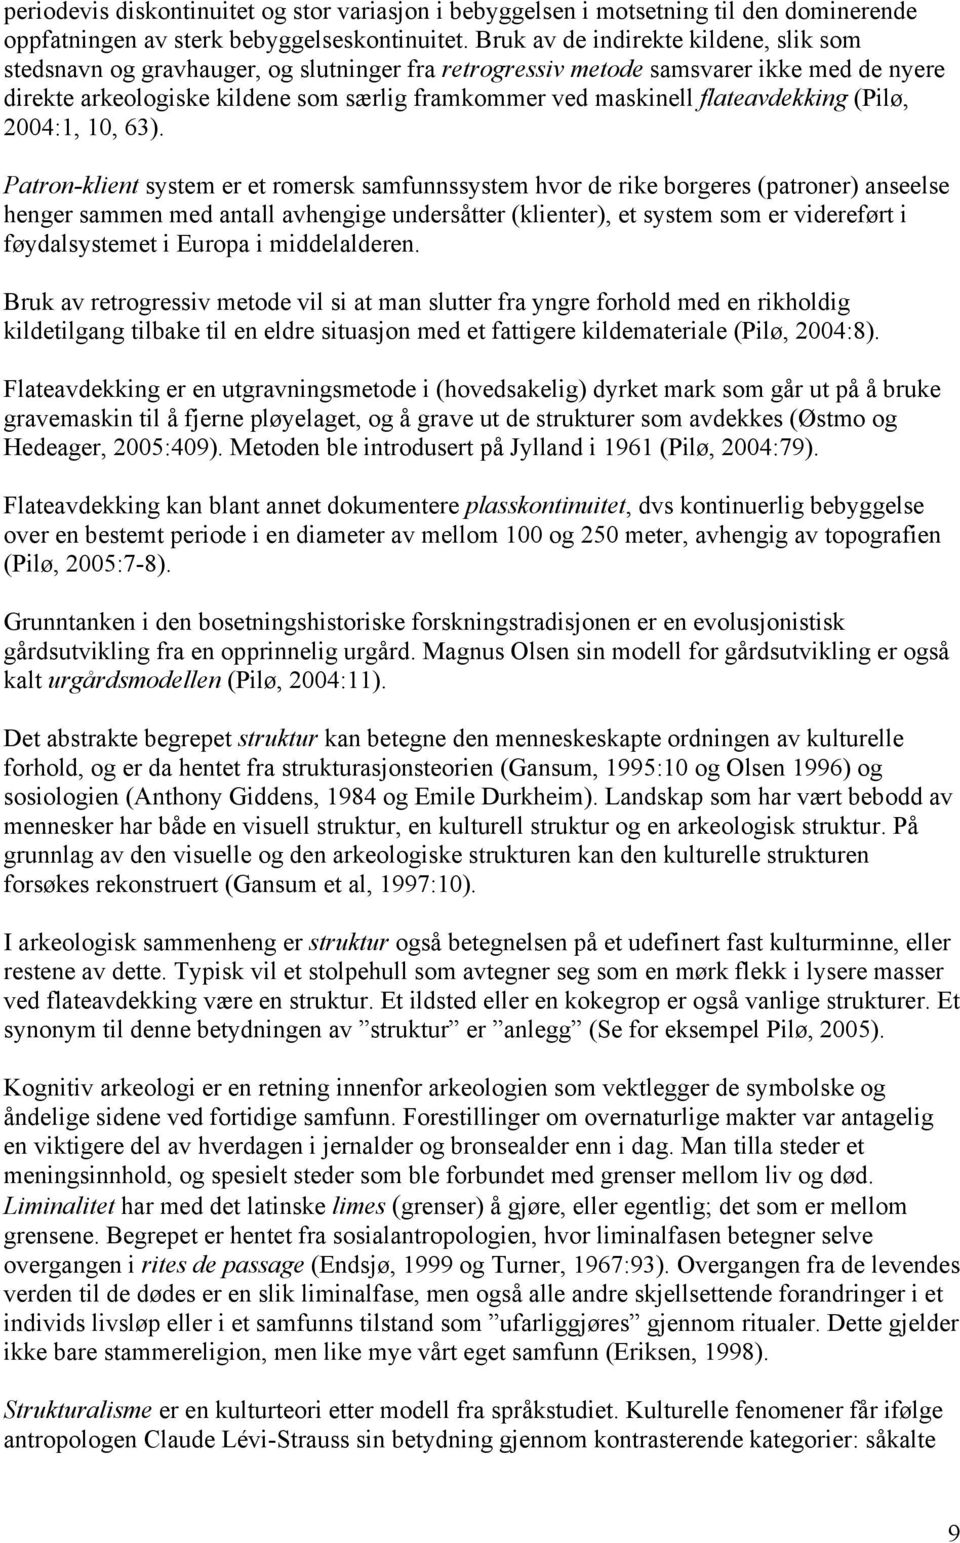 flateavdekking (Pilø, 2004:1, 10, 63).